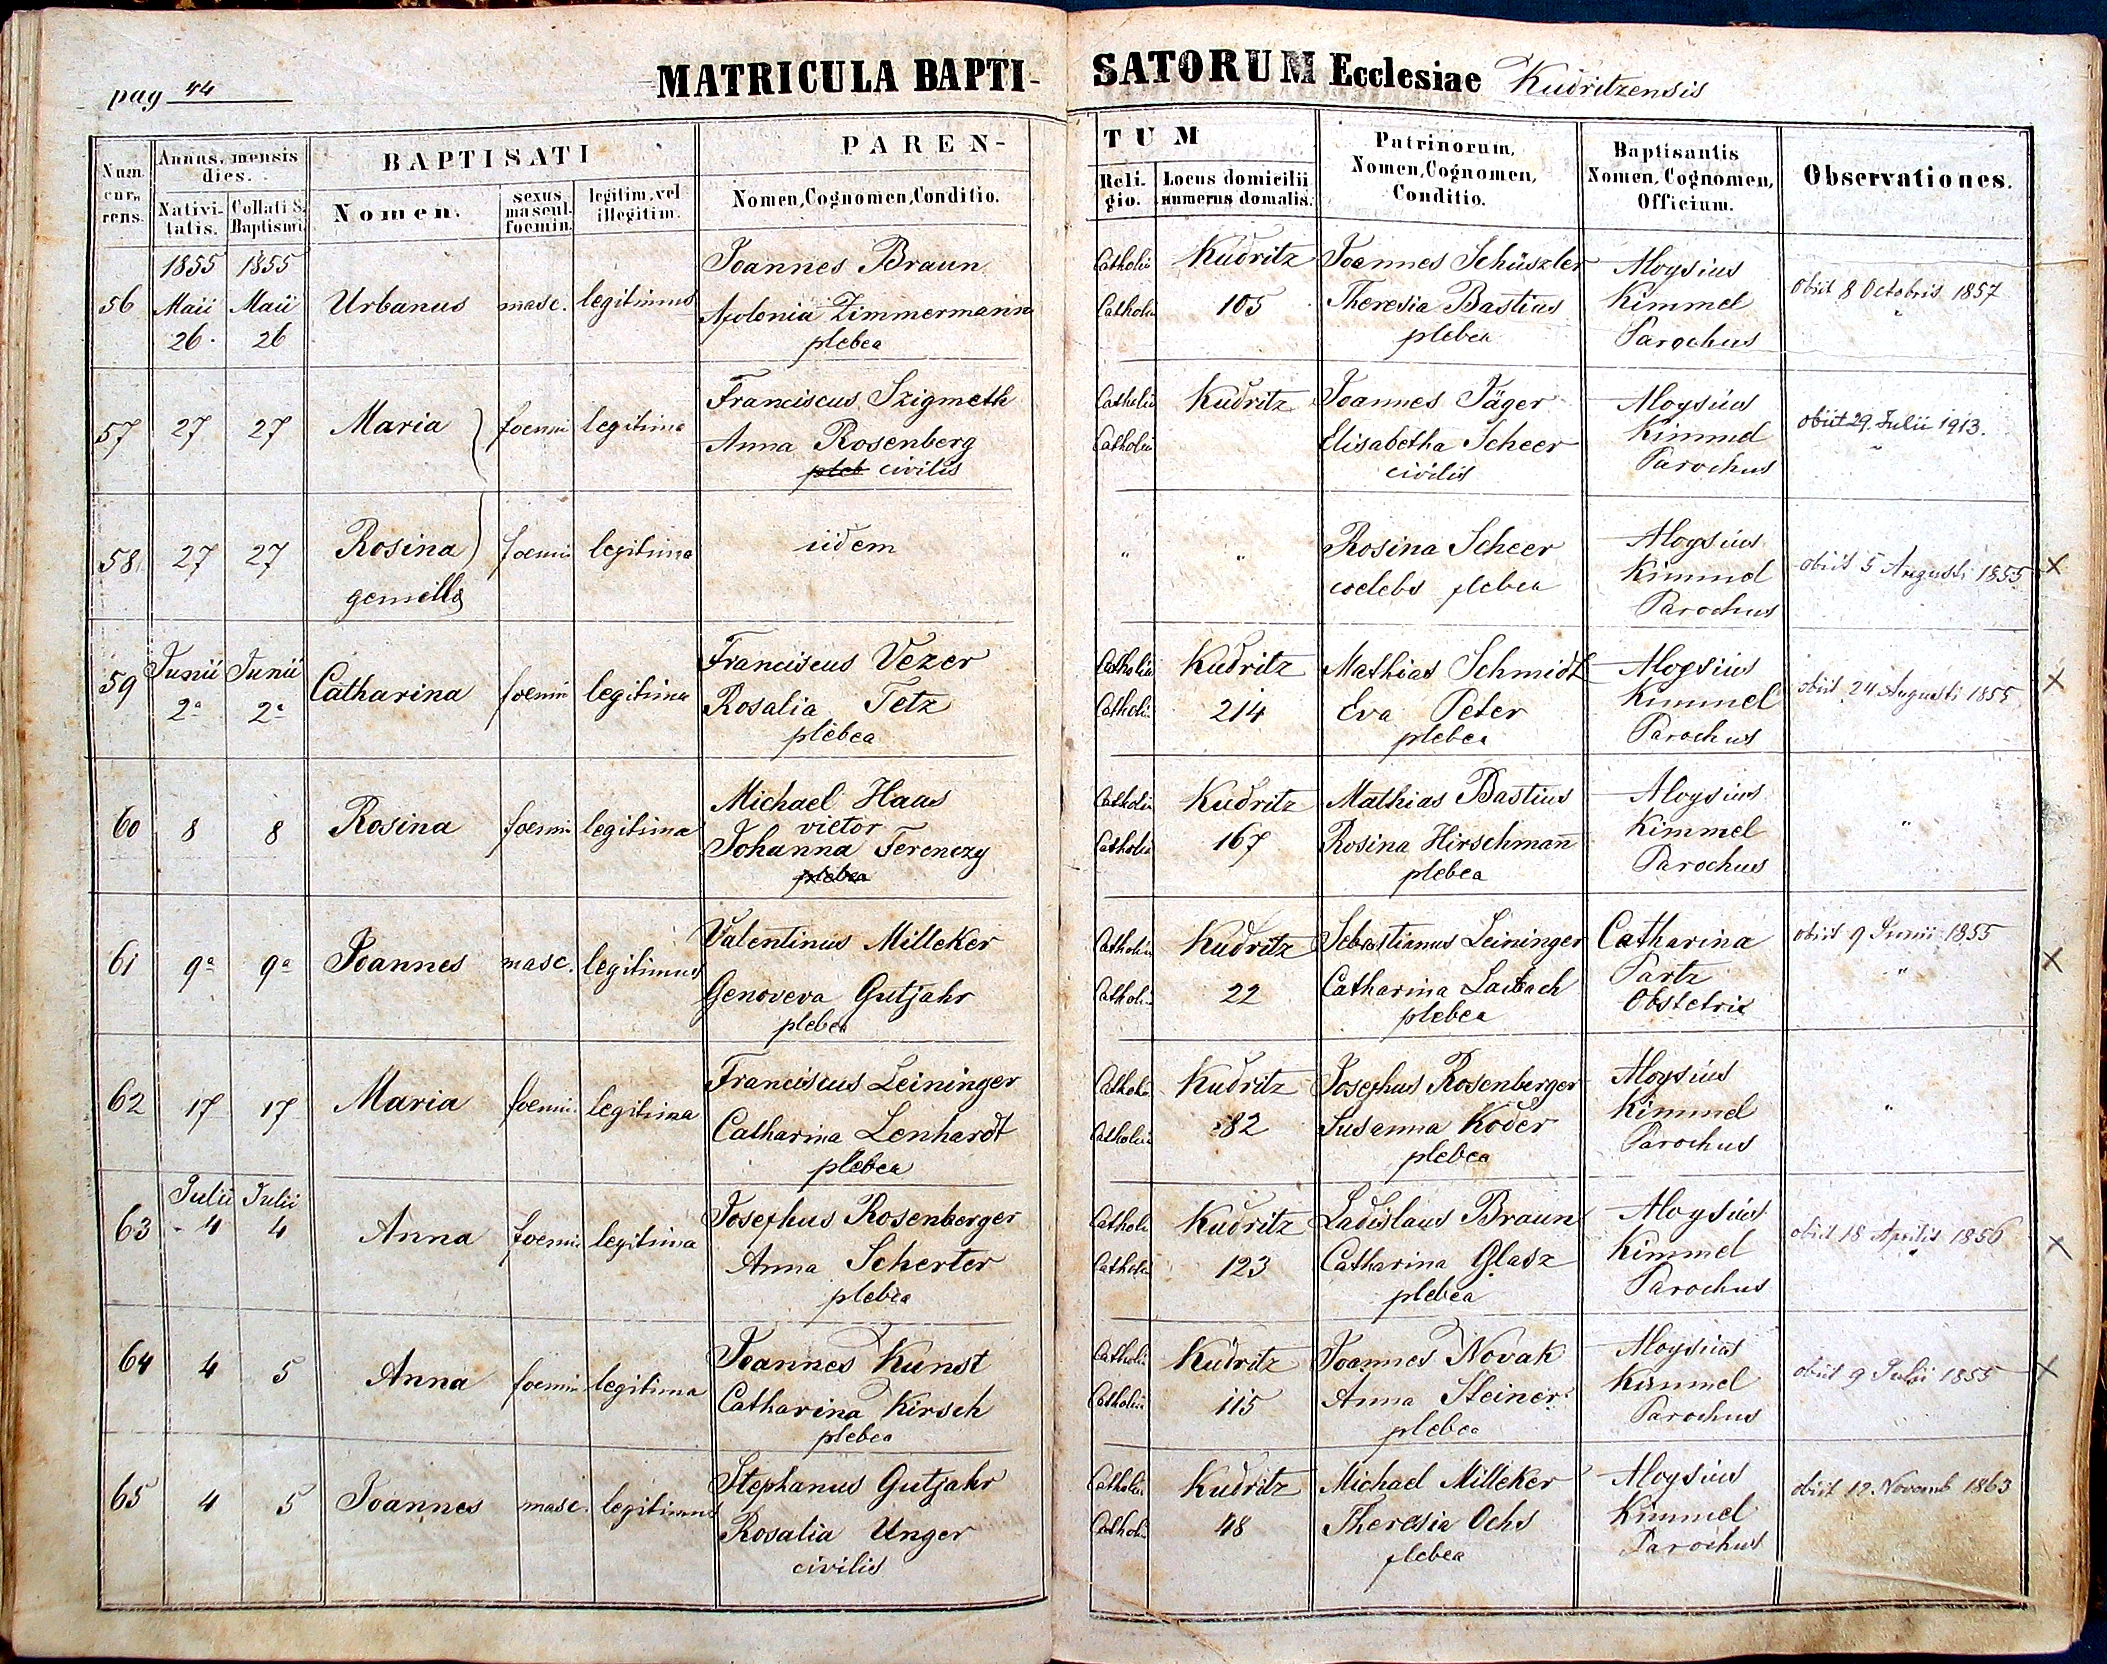 images/church_records/BIRTHS/1852-1870B/044